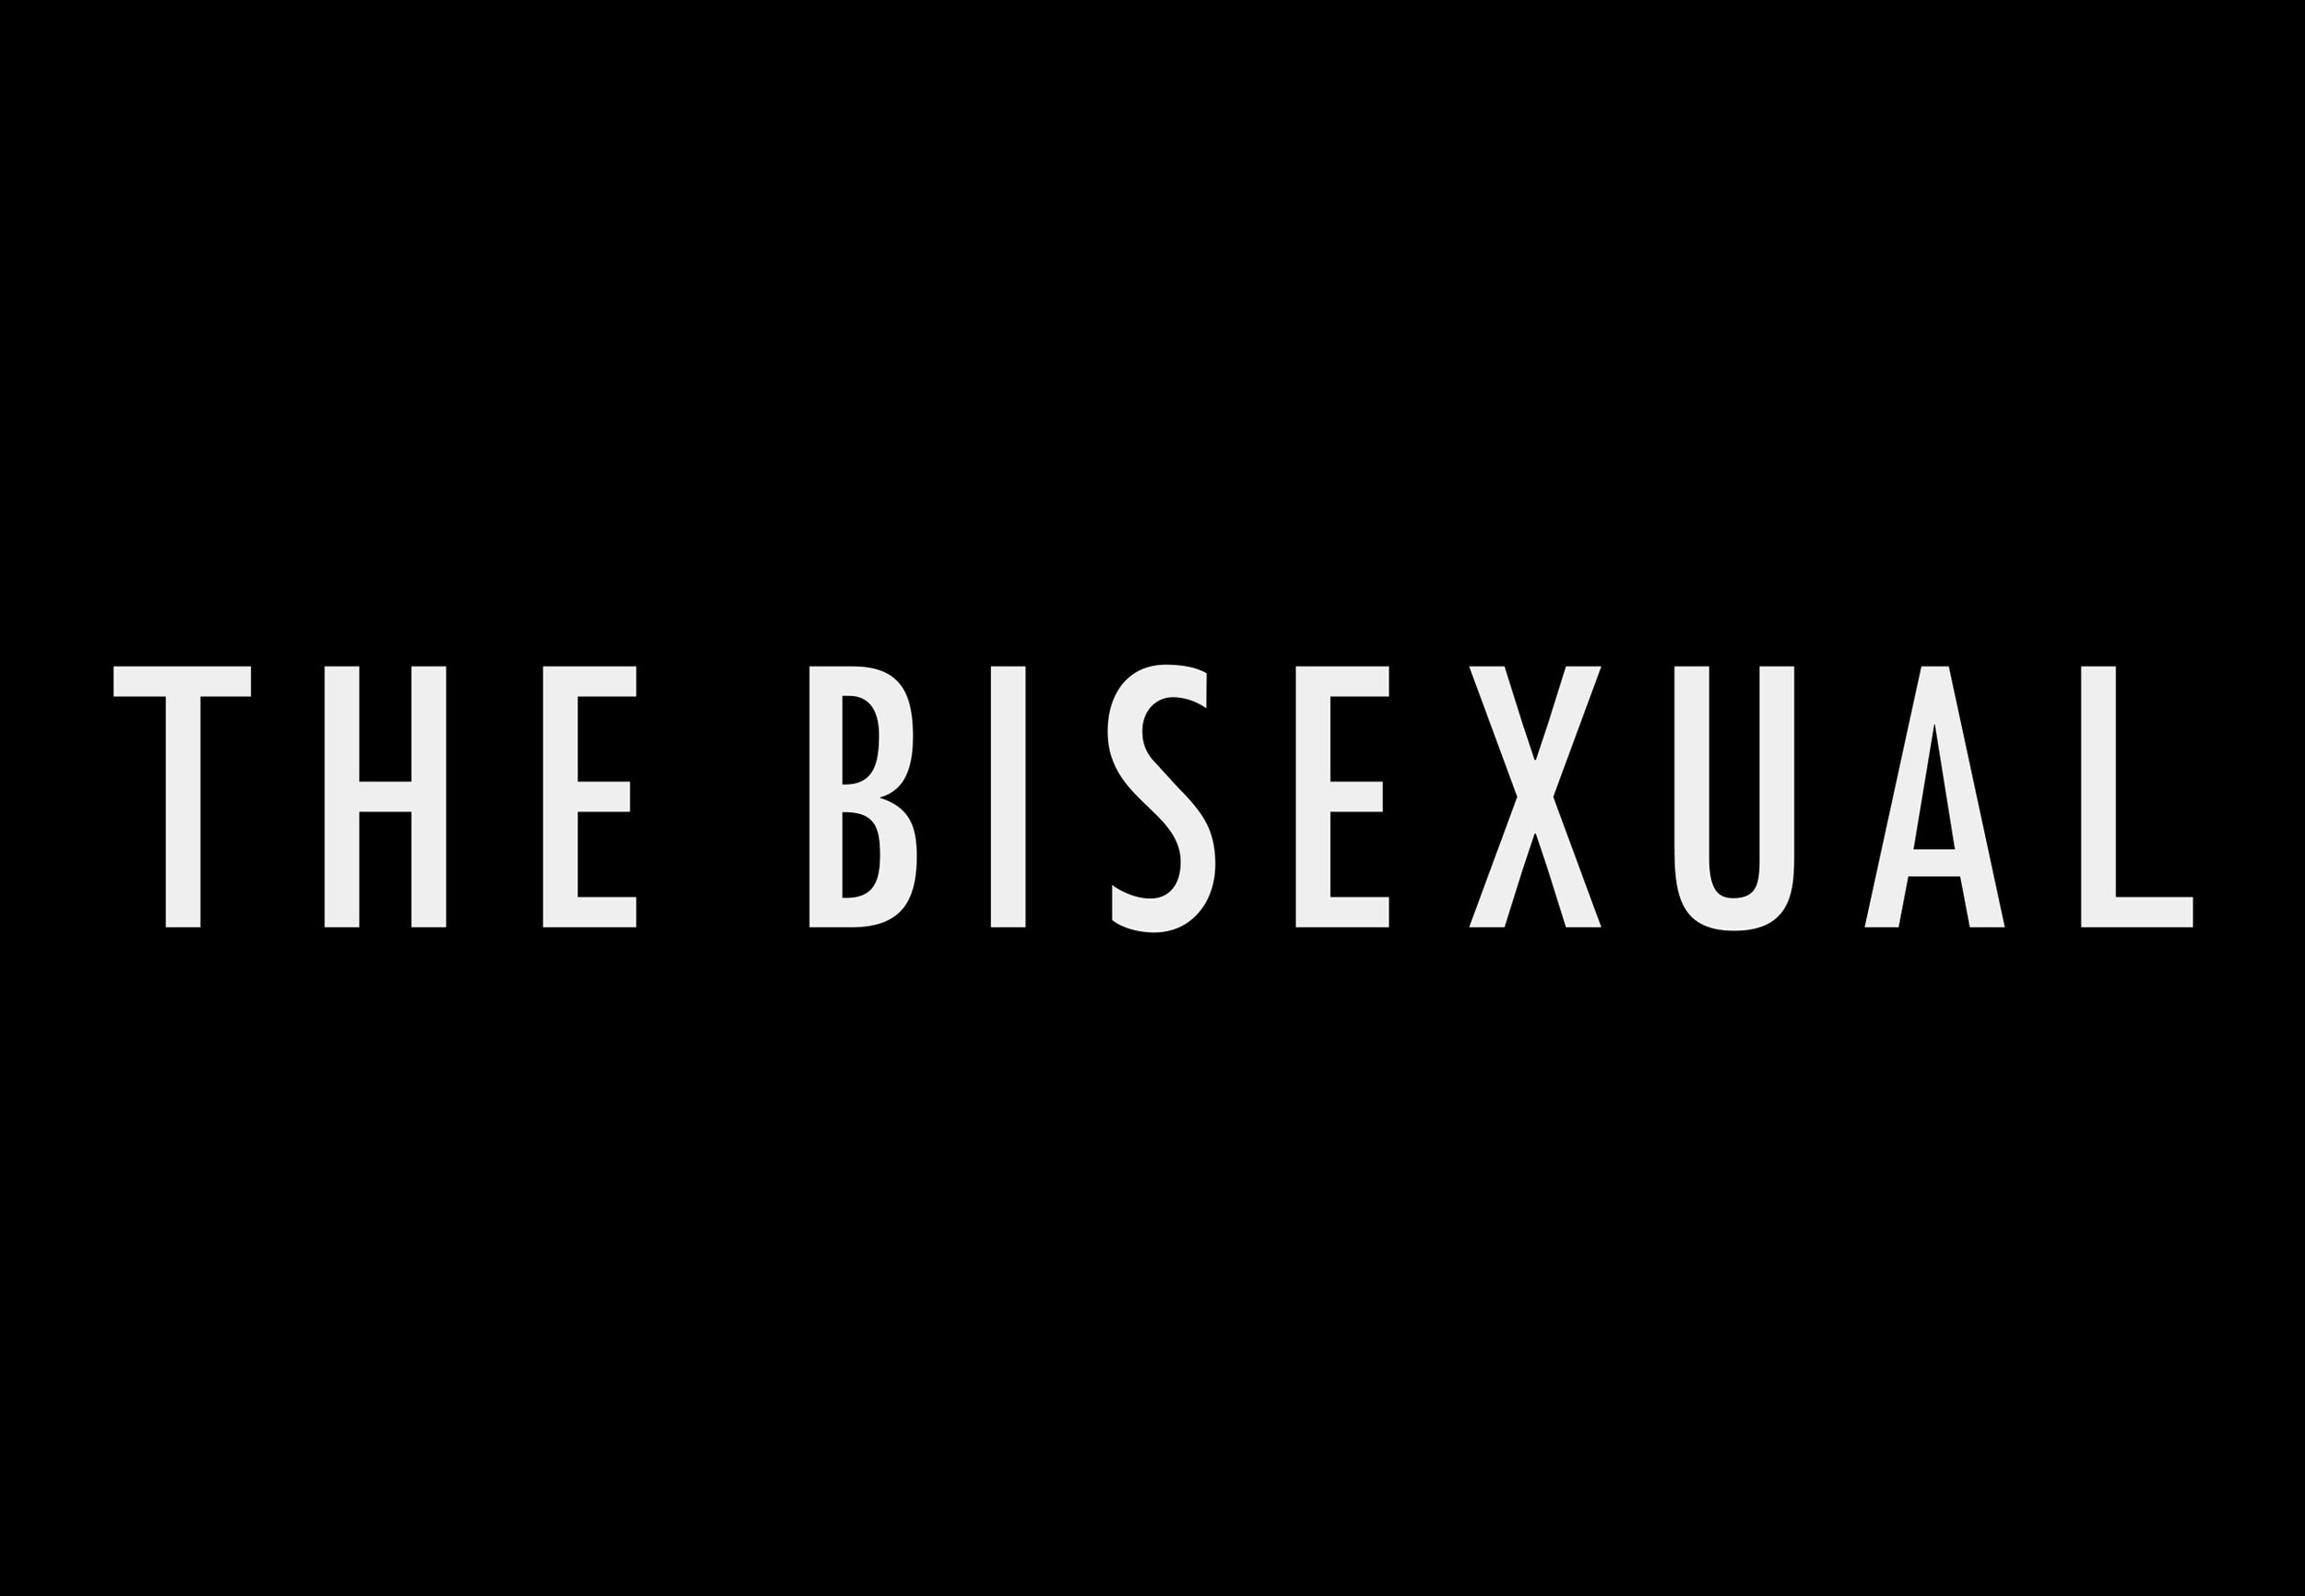 The_Bisexual_Title-Idenitity_Charlotte_Retief_Logotype.jpg